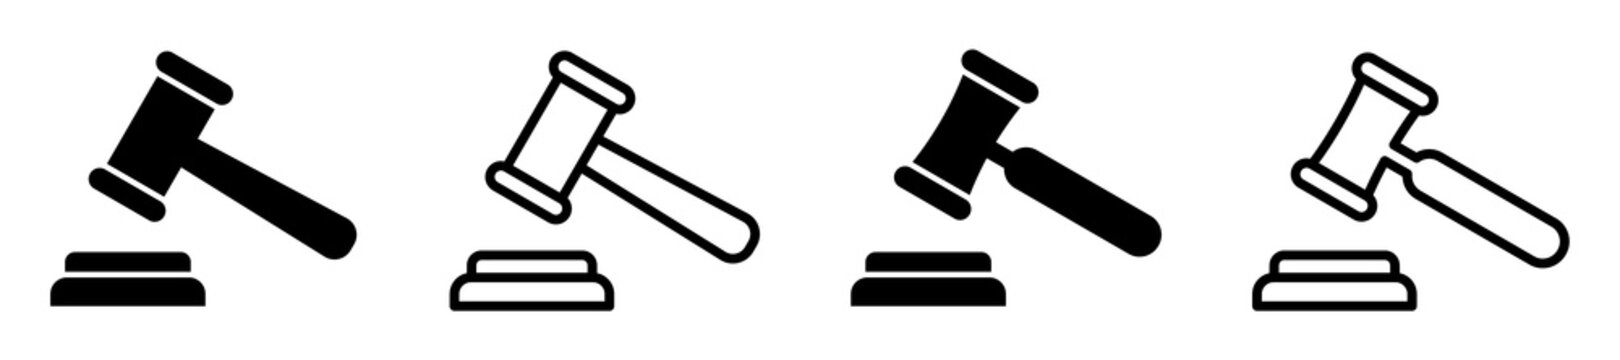 Set of gavel icons, legal gavel. Auction hammer symbols. Judge, hammer. Vector illustration.